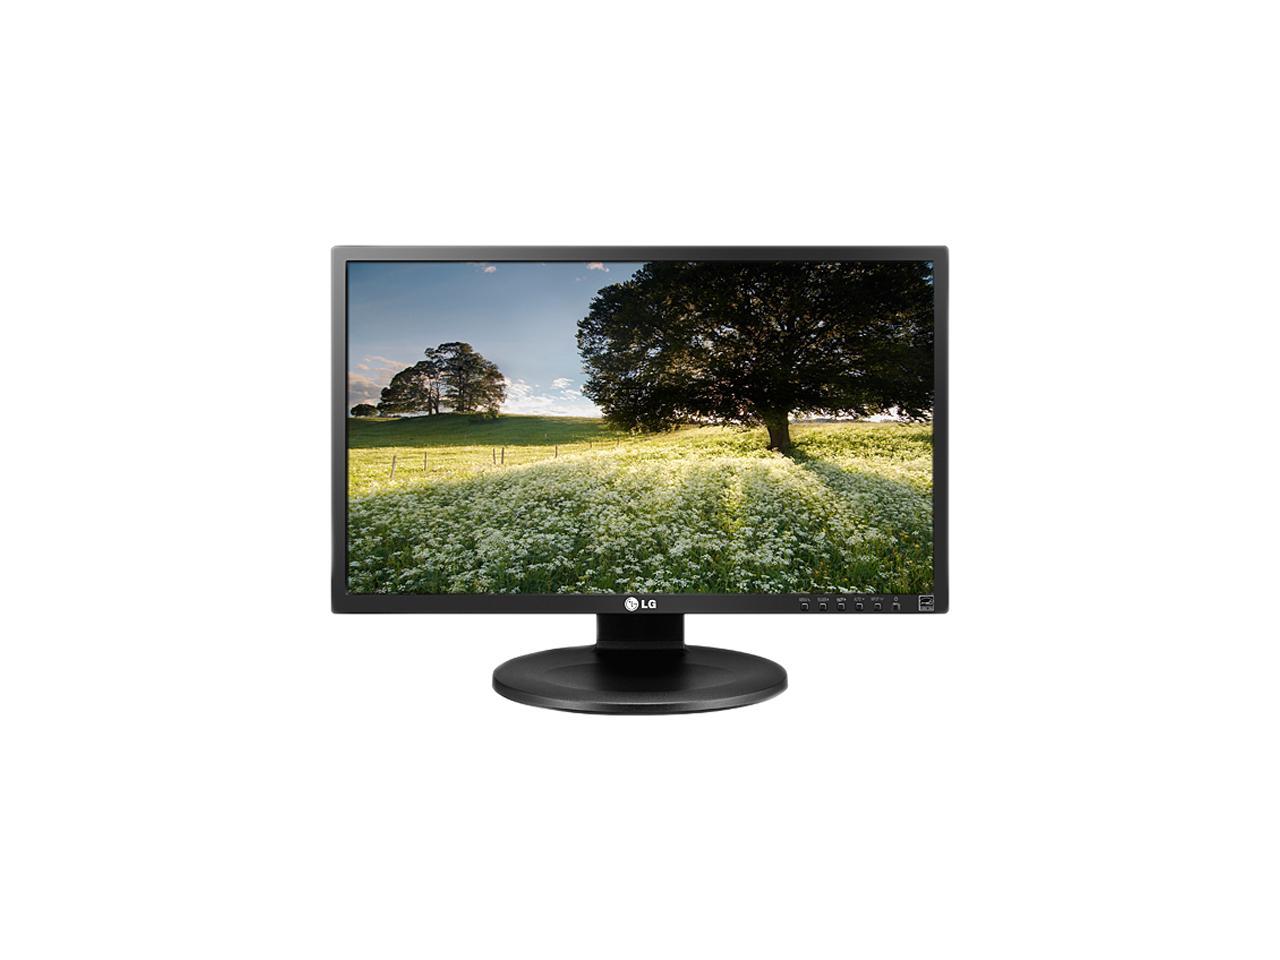 LG 24MB35P-B Black 23.8" 5ms IPS-Panel Widescreen LED Backlight LCD Monitor height&pivot adjustable 250 cd/m2 DFC 5,000,000:1 (1000:1)